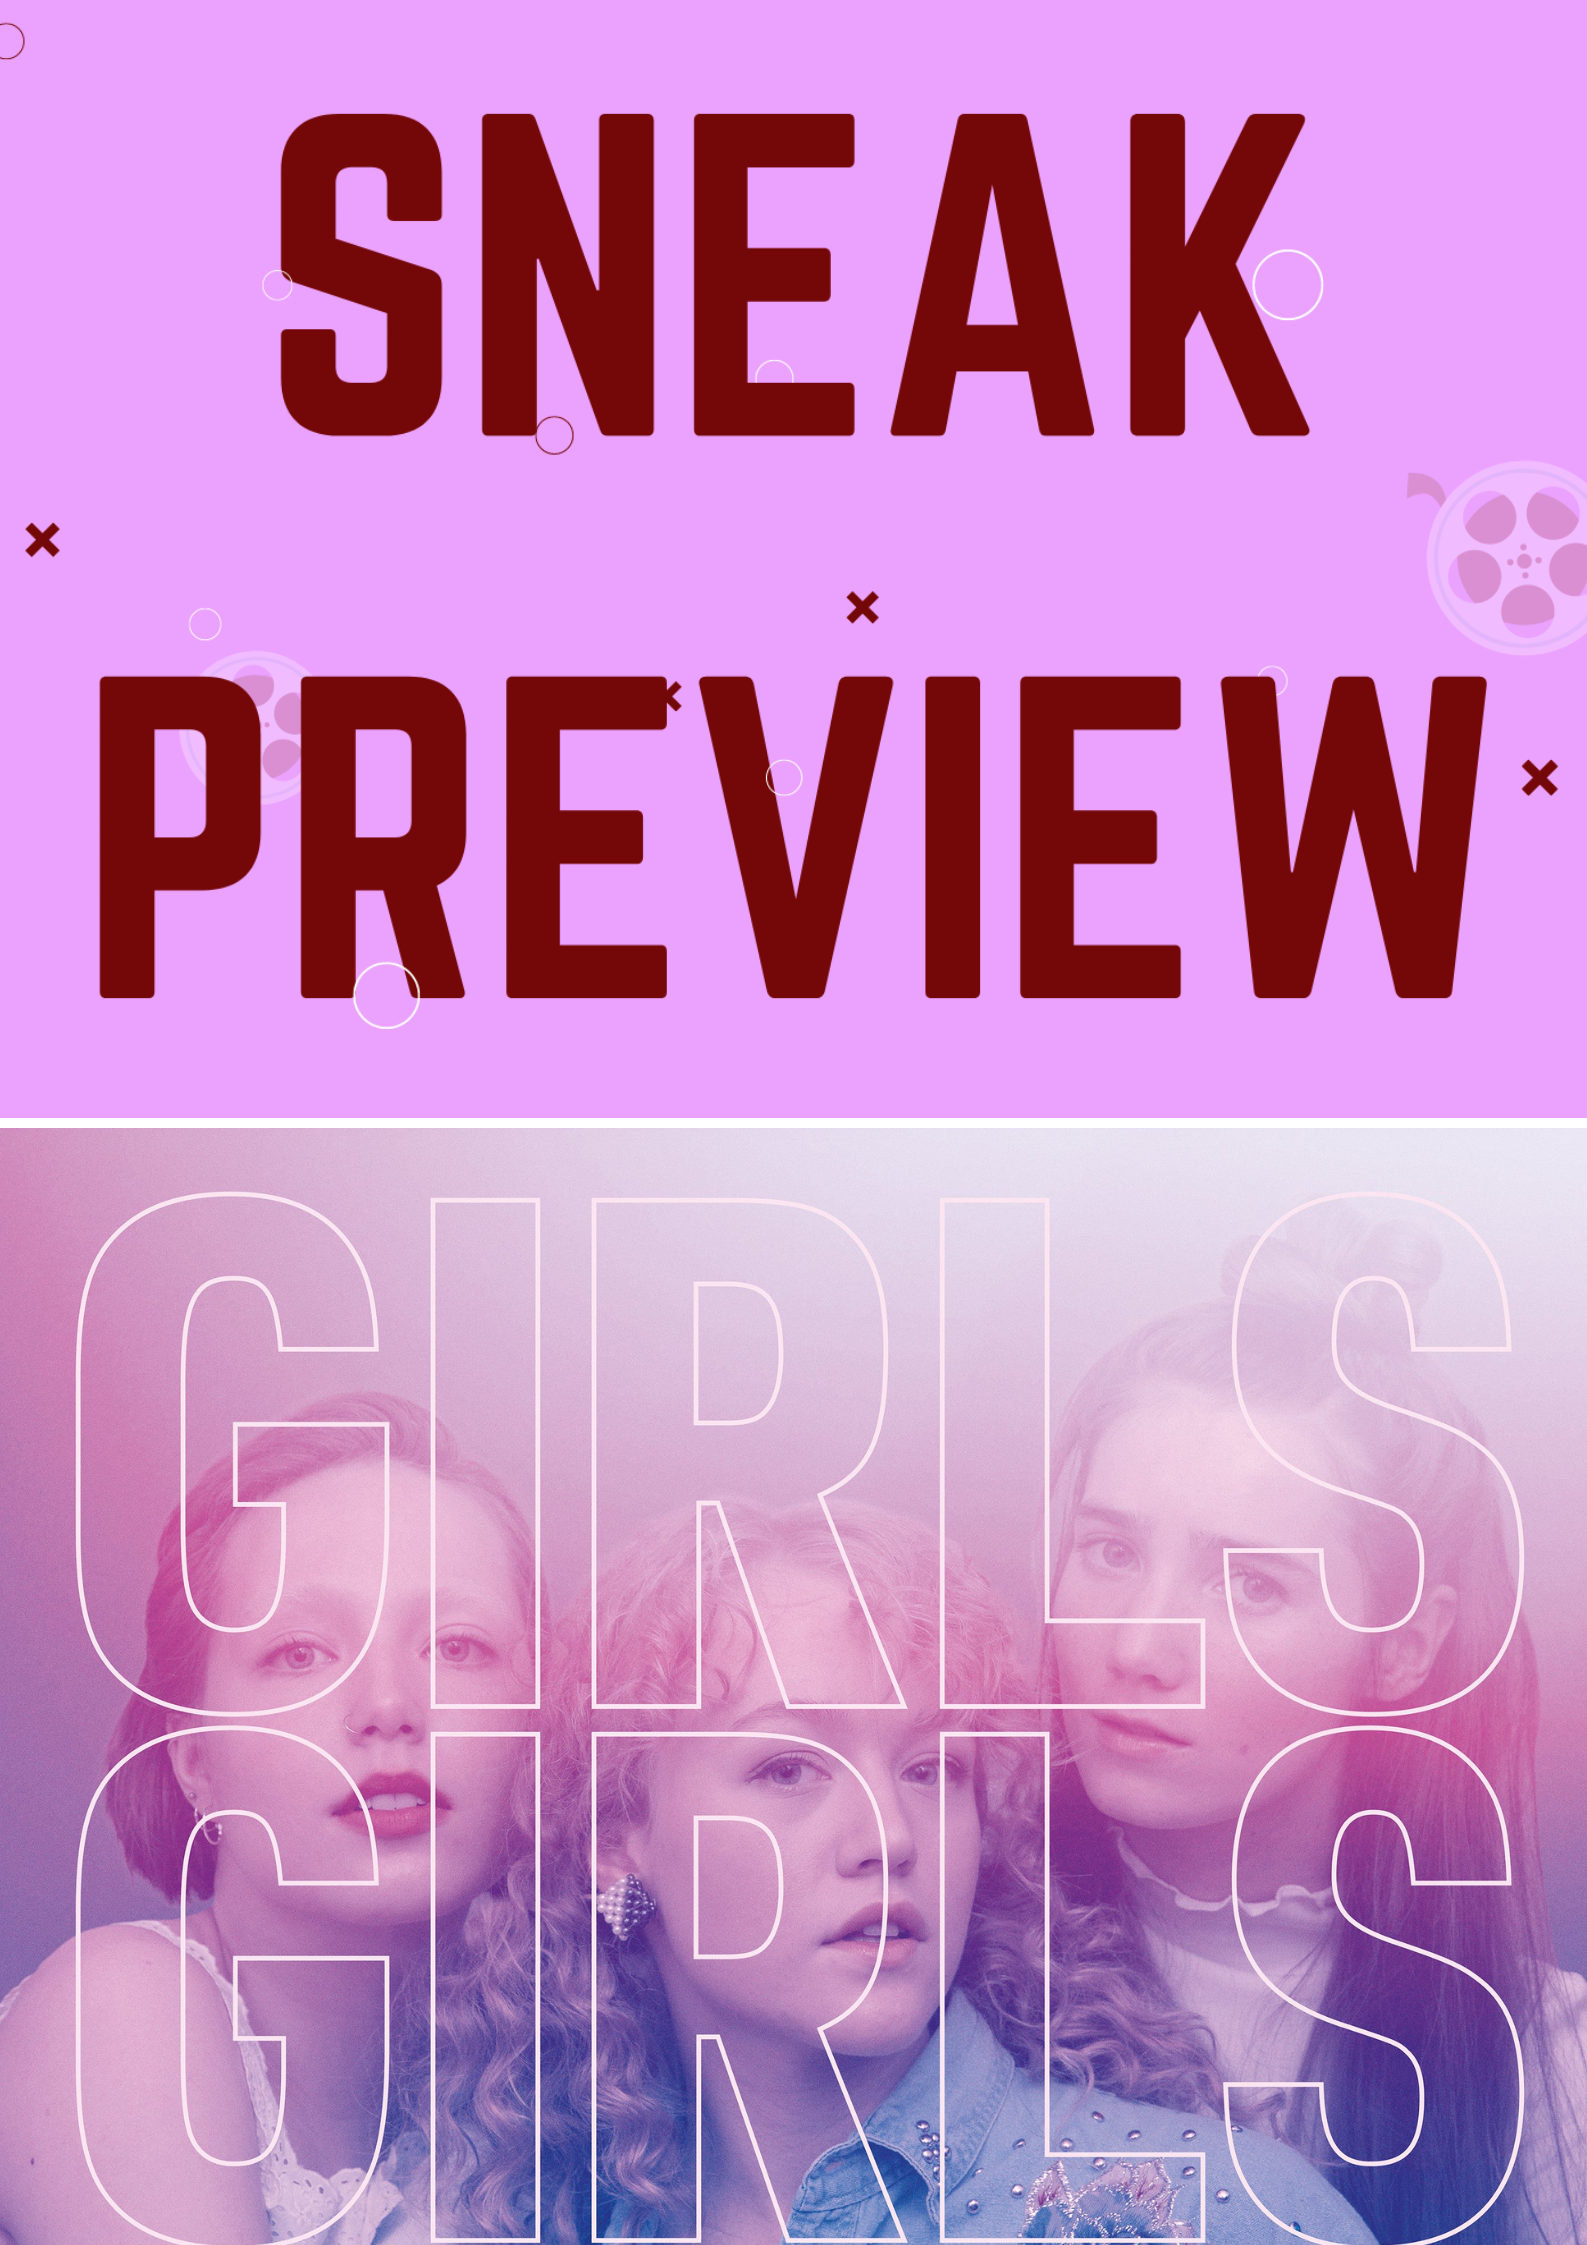 Foto Valentinstag<br/>
Sneak-Preview<br/>
Girls Girls Girls